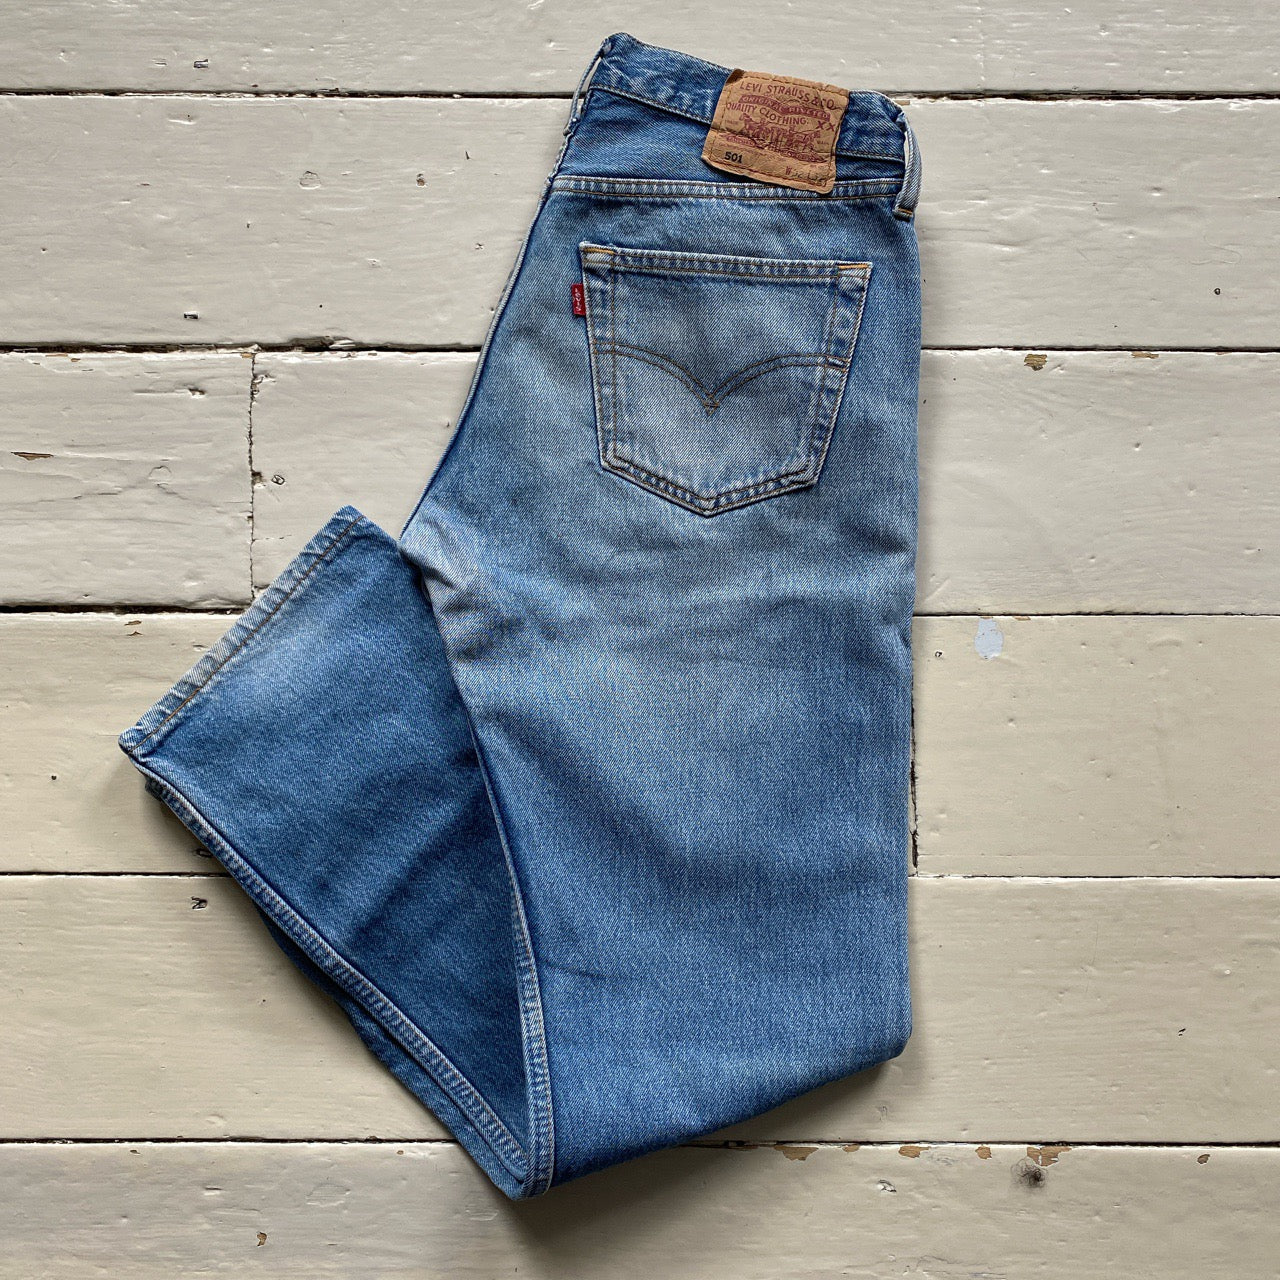 Levis 501 Distressed Jeans (32/32)